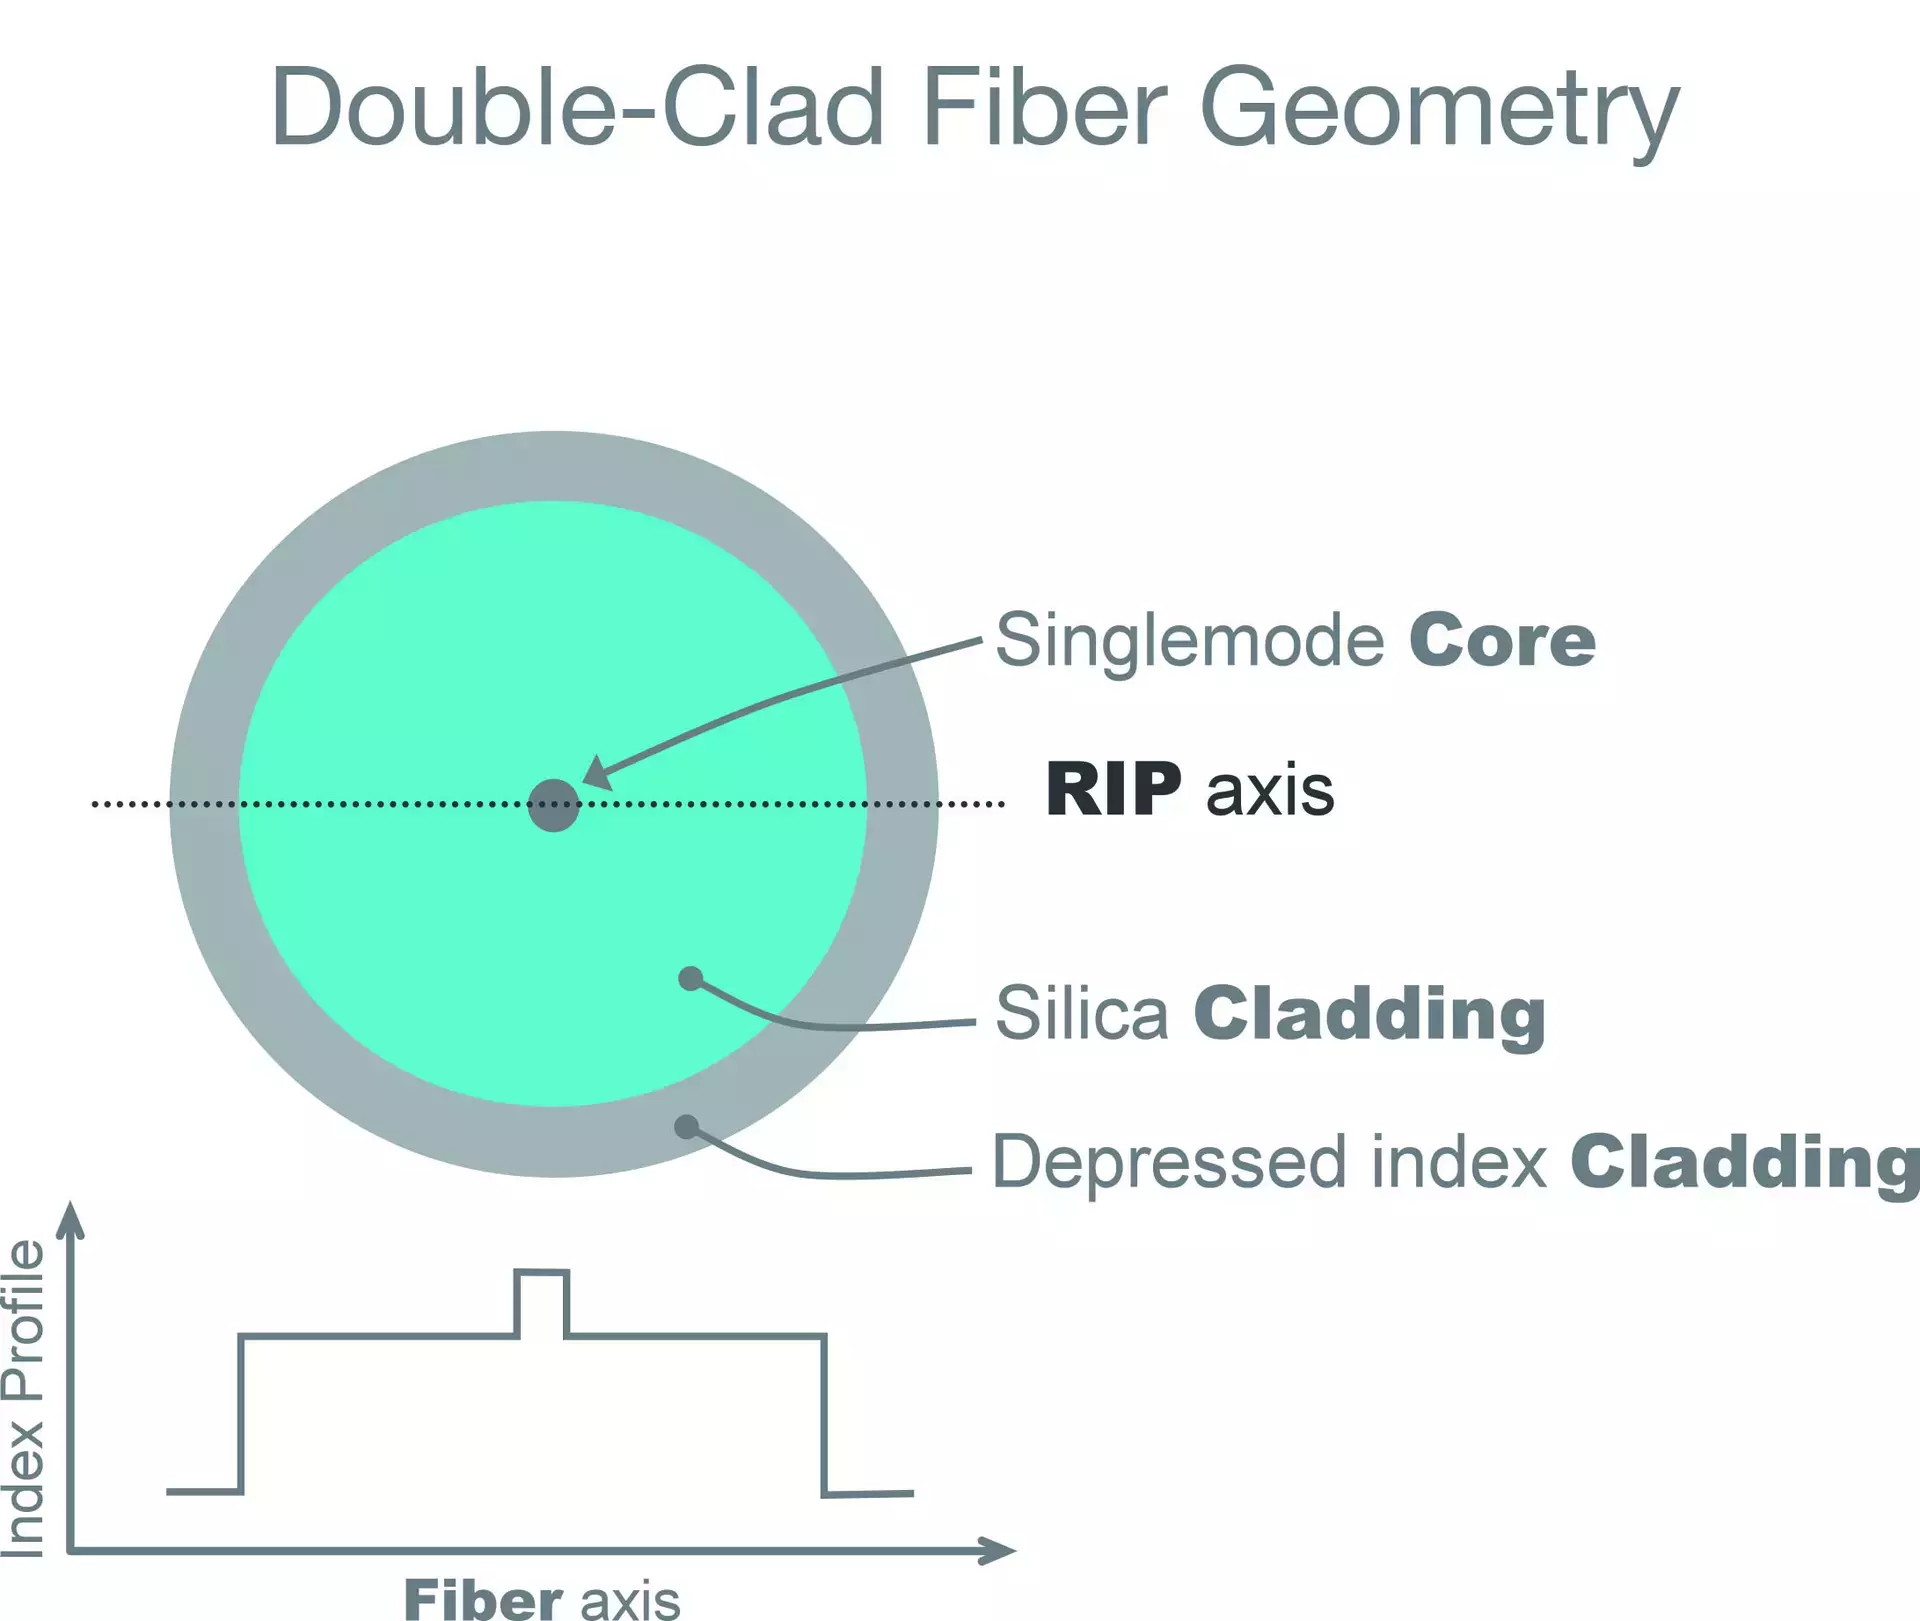 Double-Clad fiber